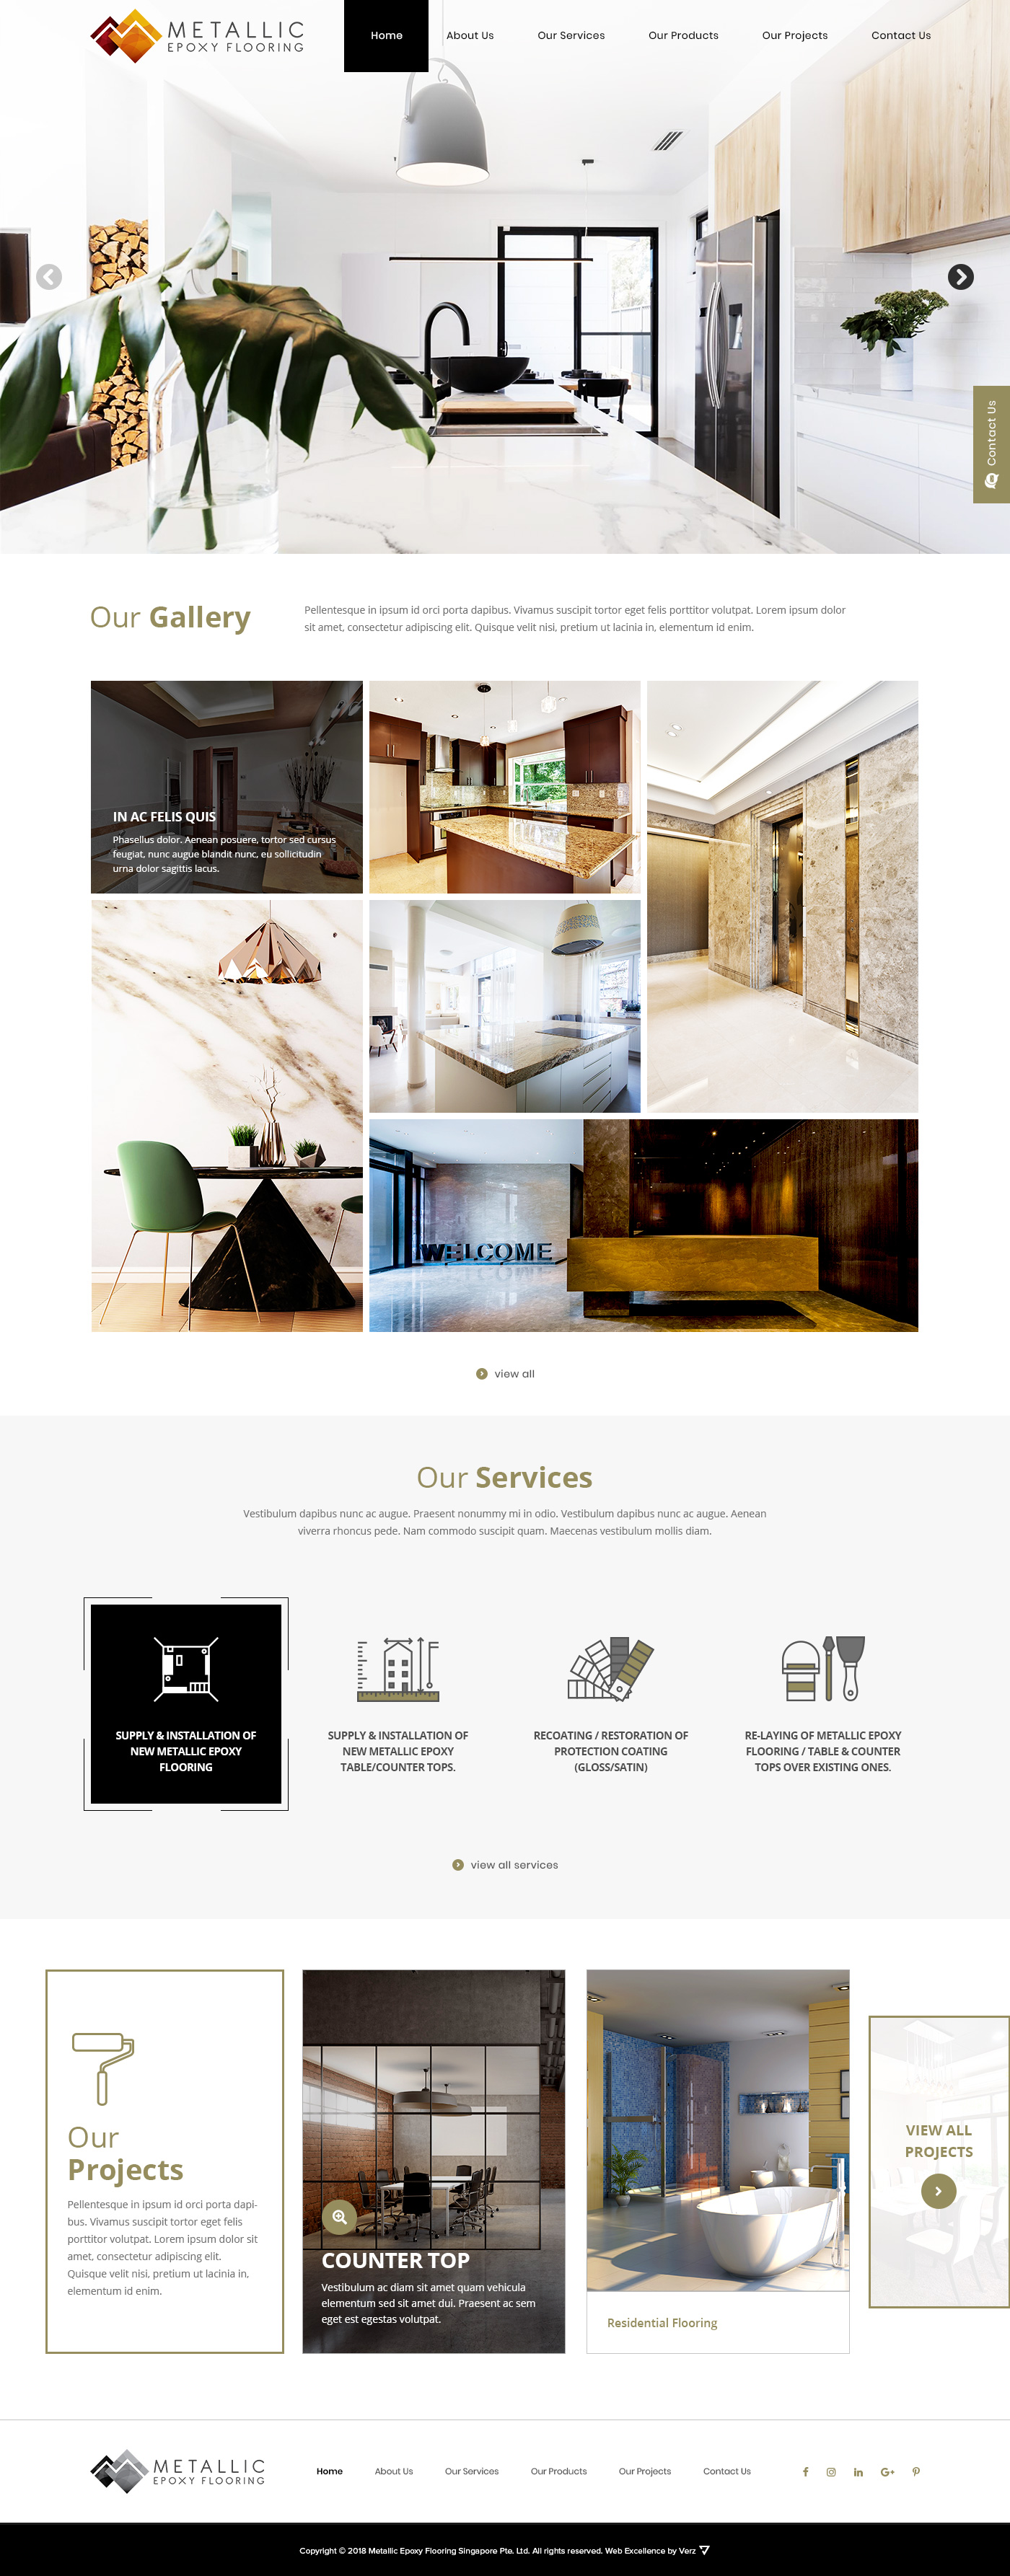 Web Design Philippines | Website Design & Web Development Company